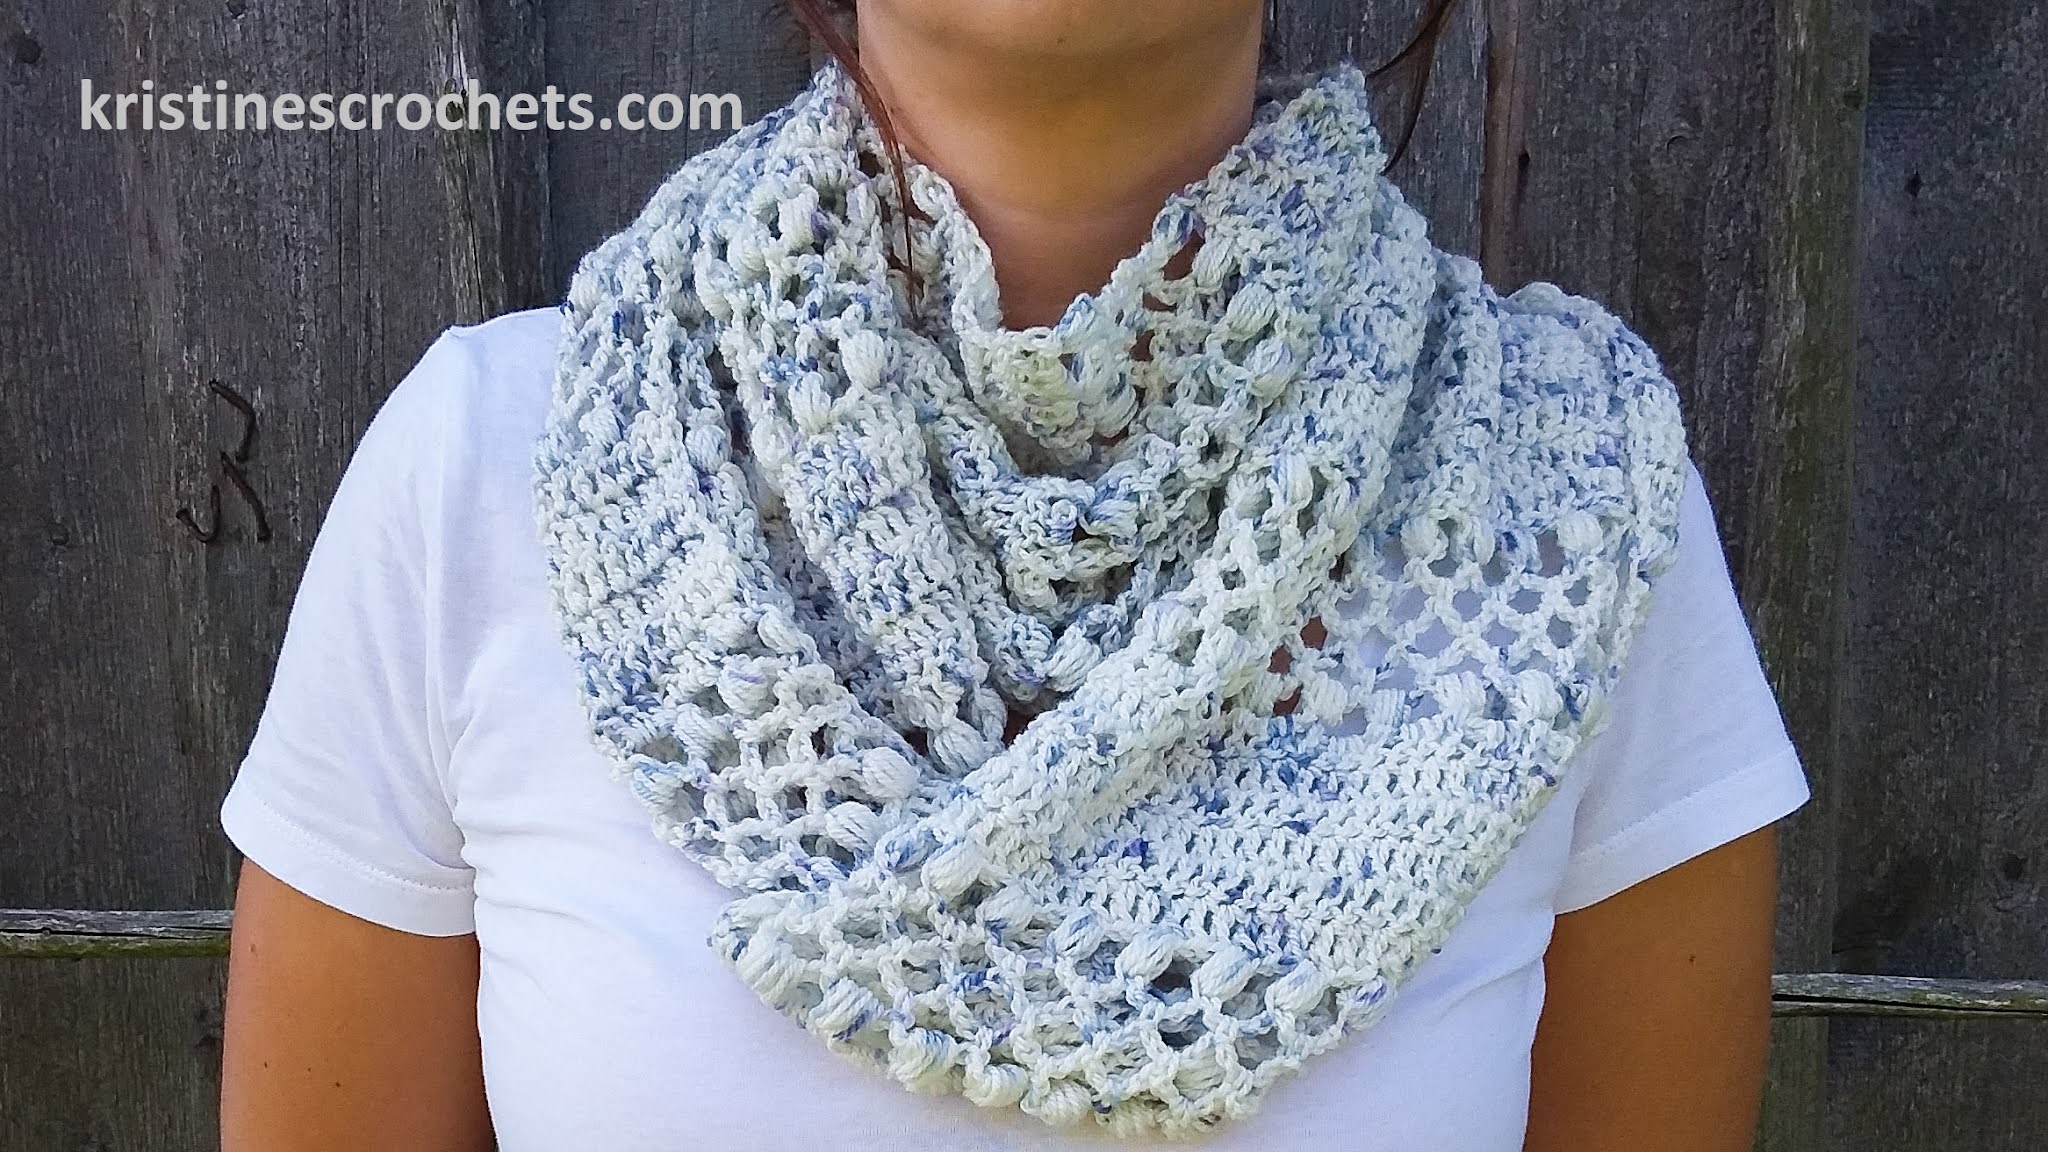 KristinesCrochets : Speckled Infinity Scarf - Free Crochet Pattern